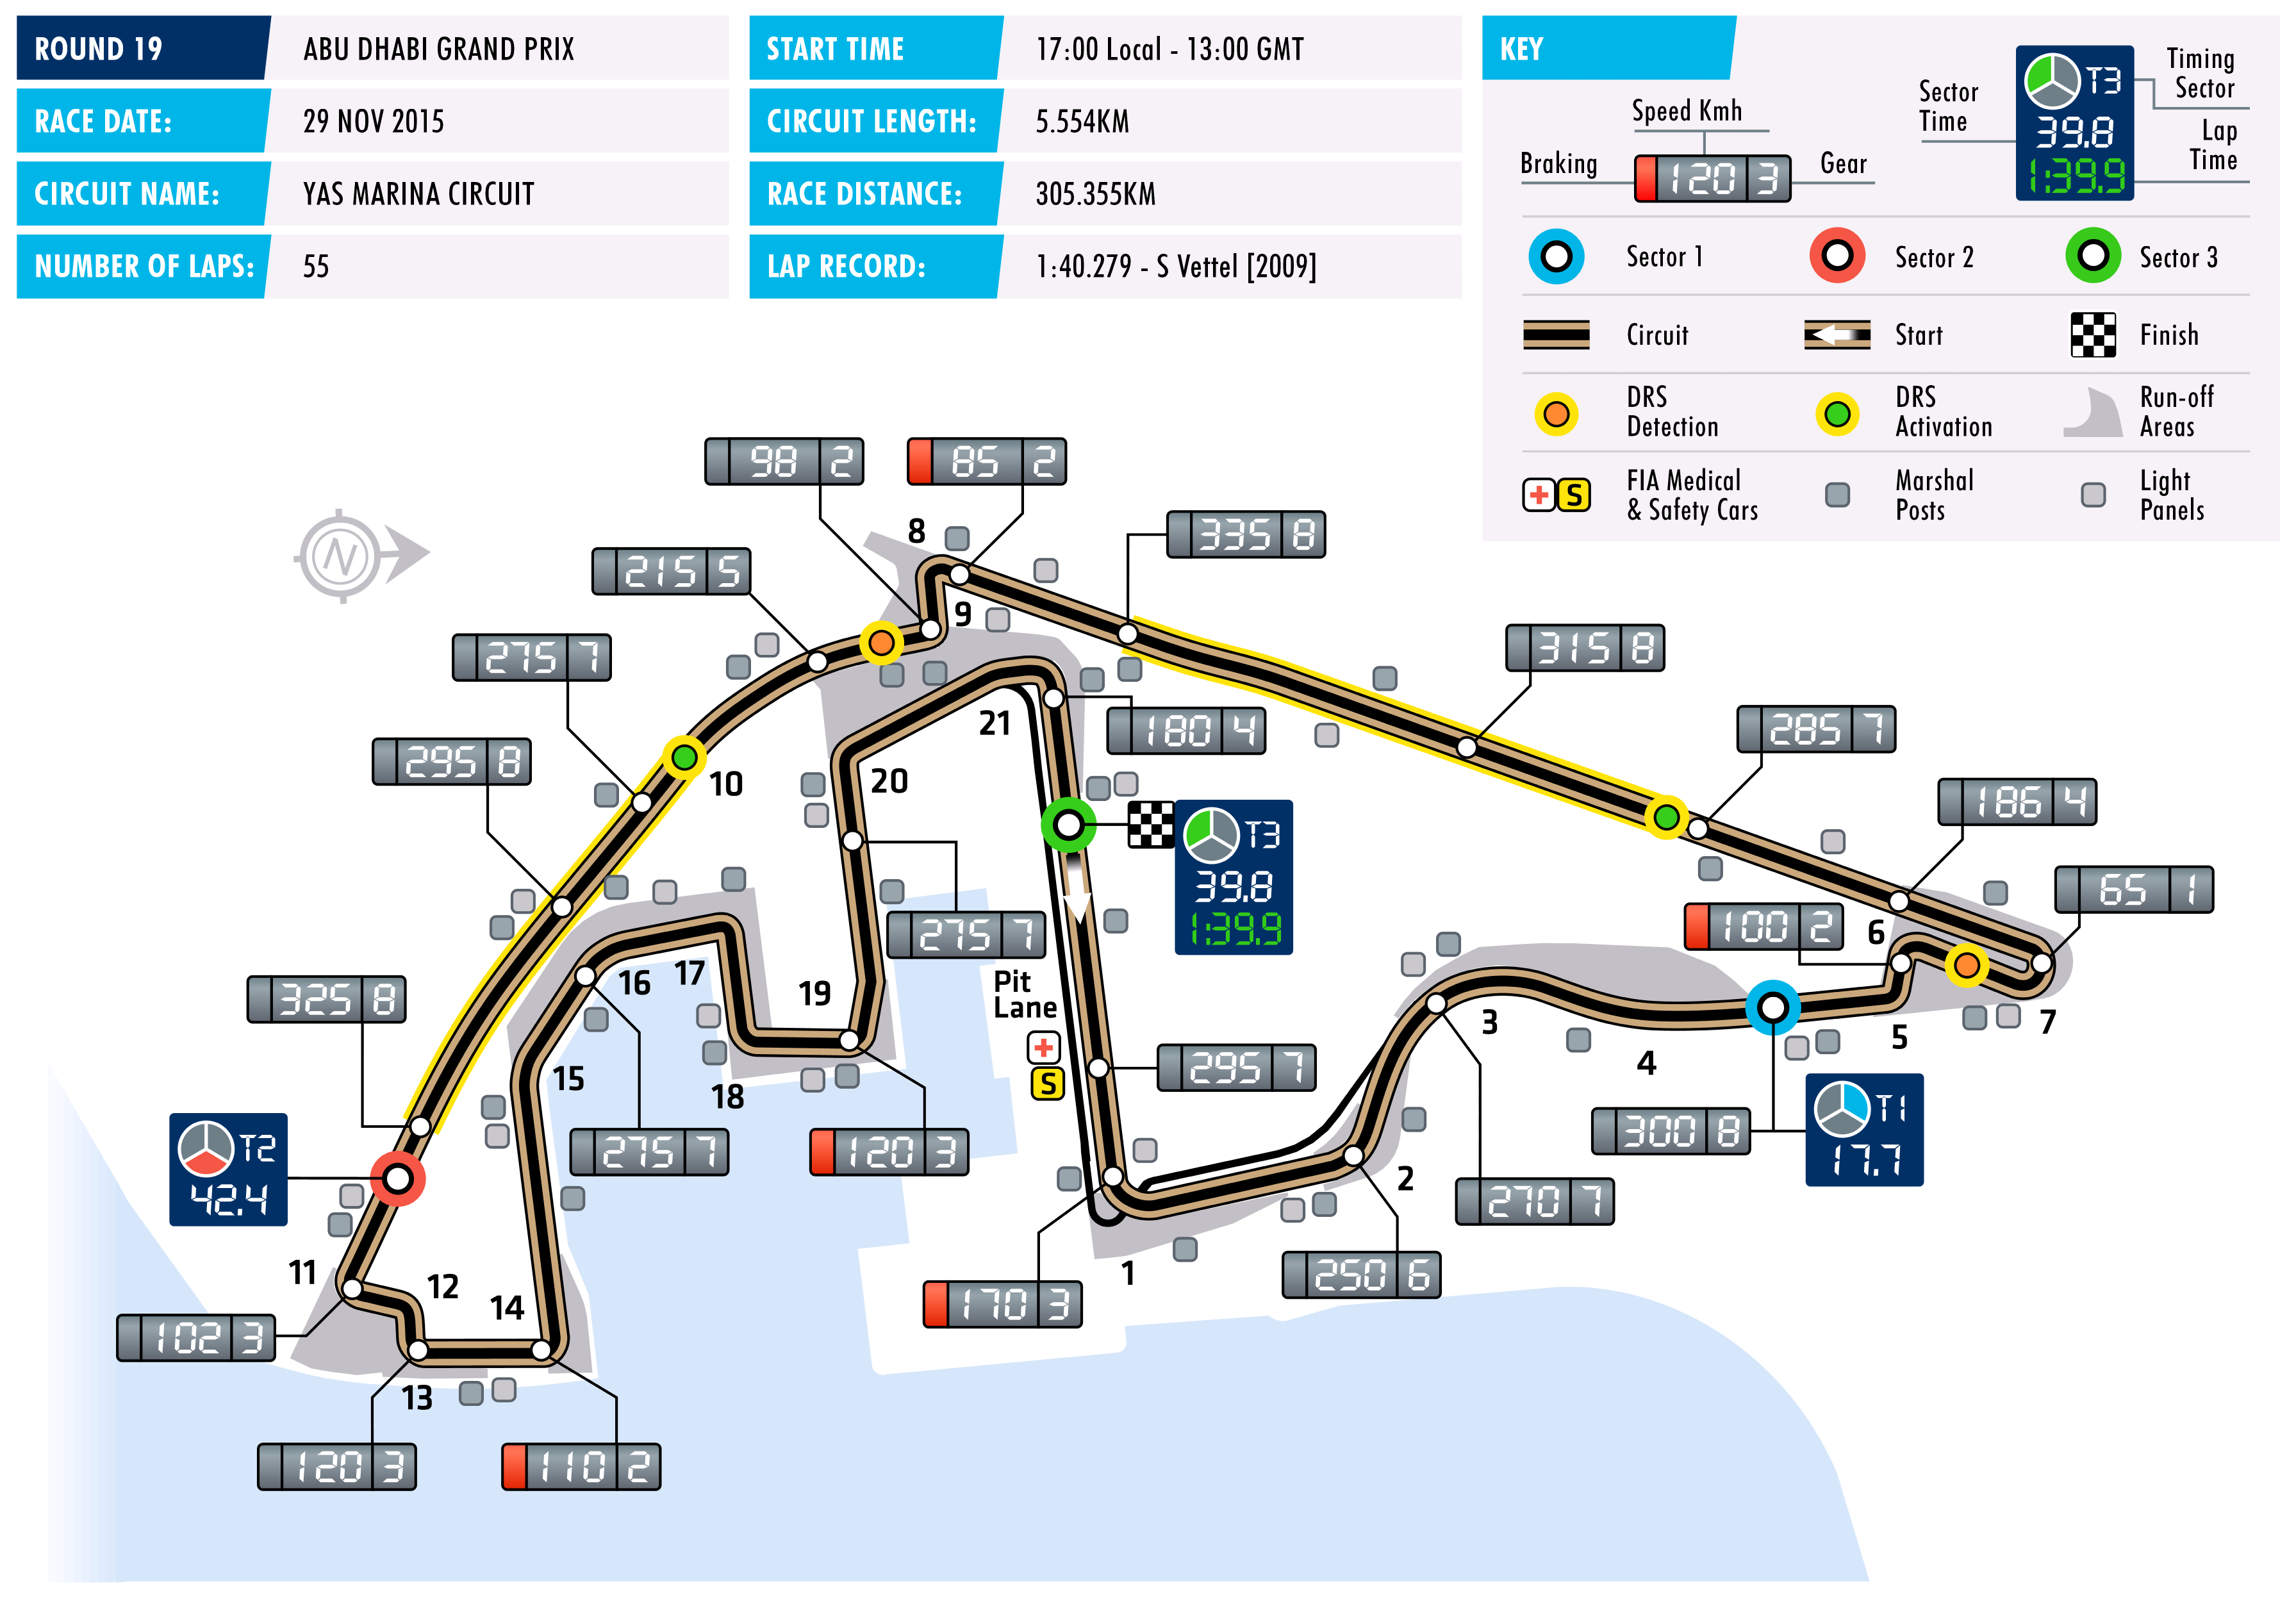 2015 Abu Dhabi Grand Prix - Circuit Map